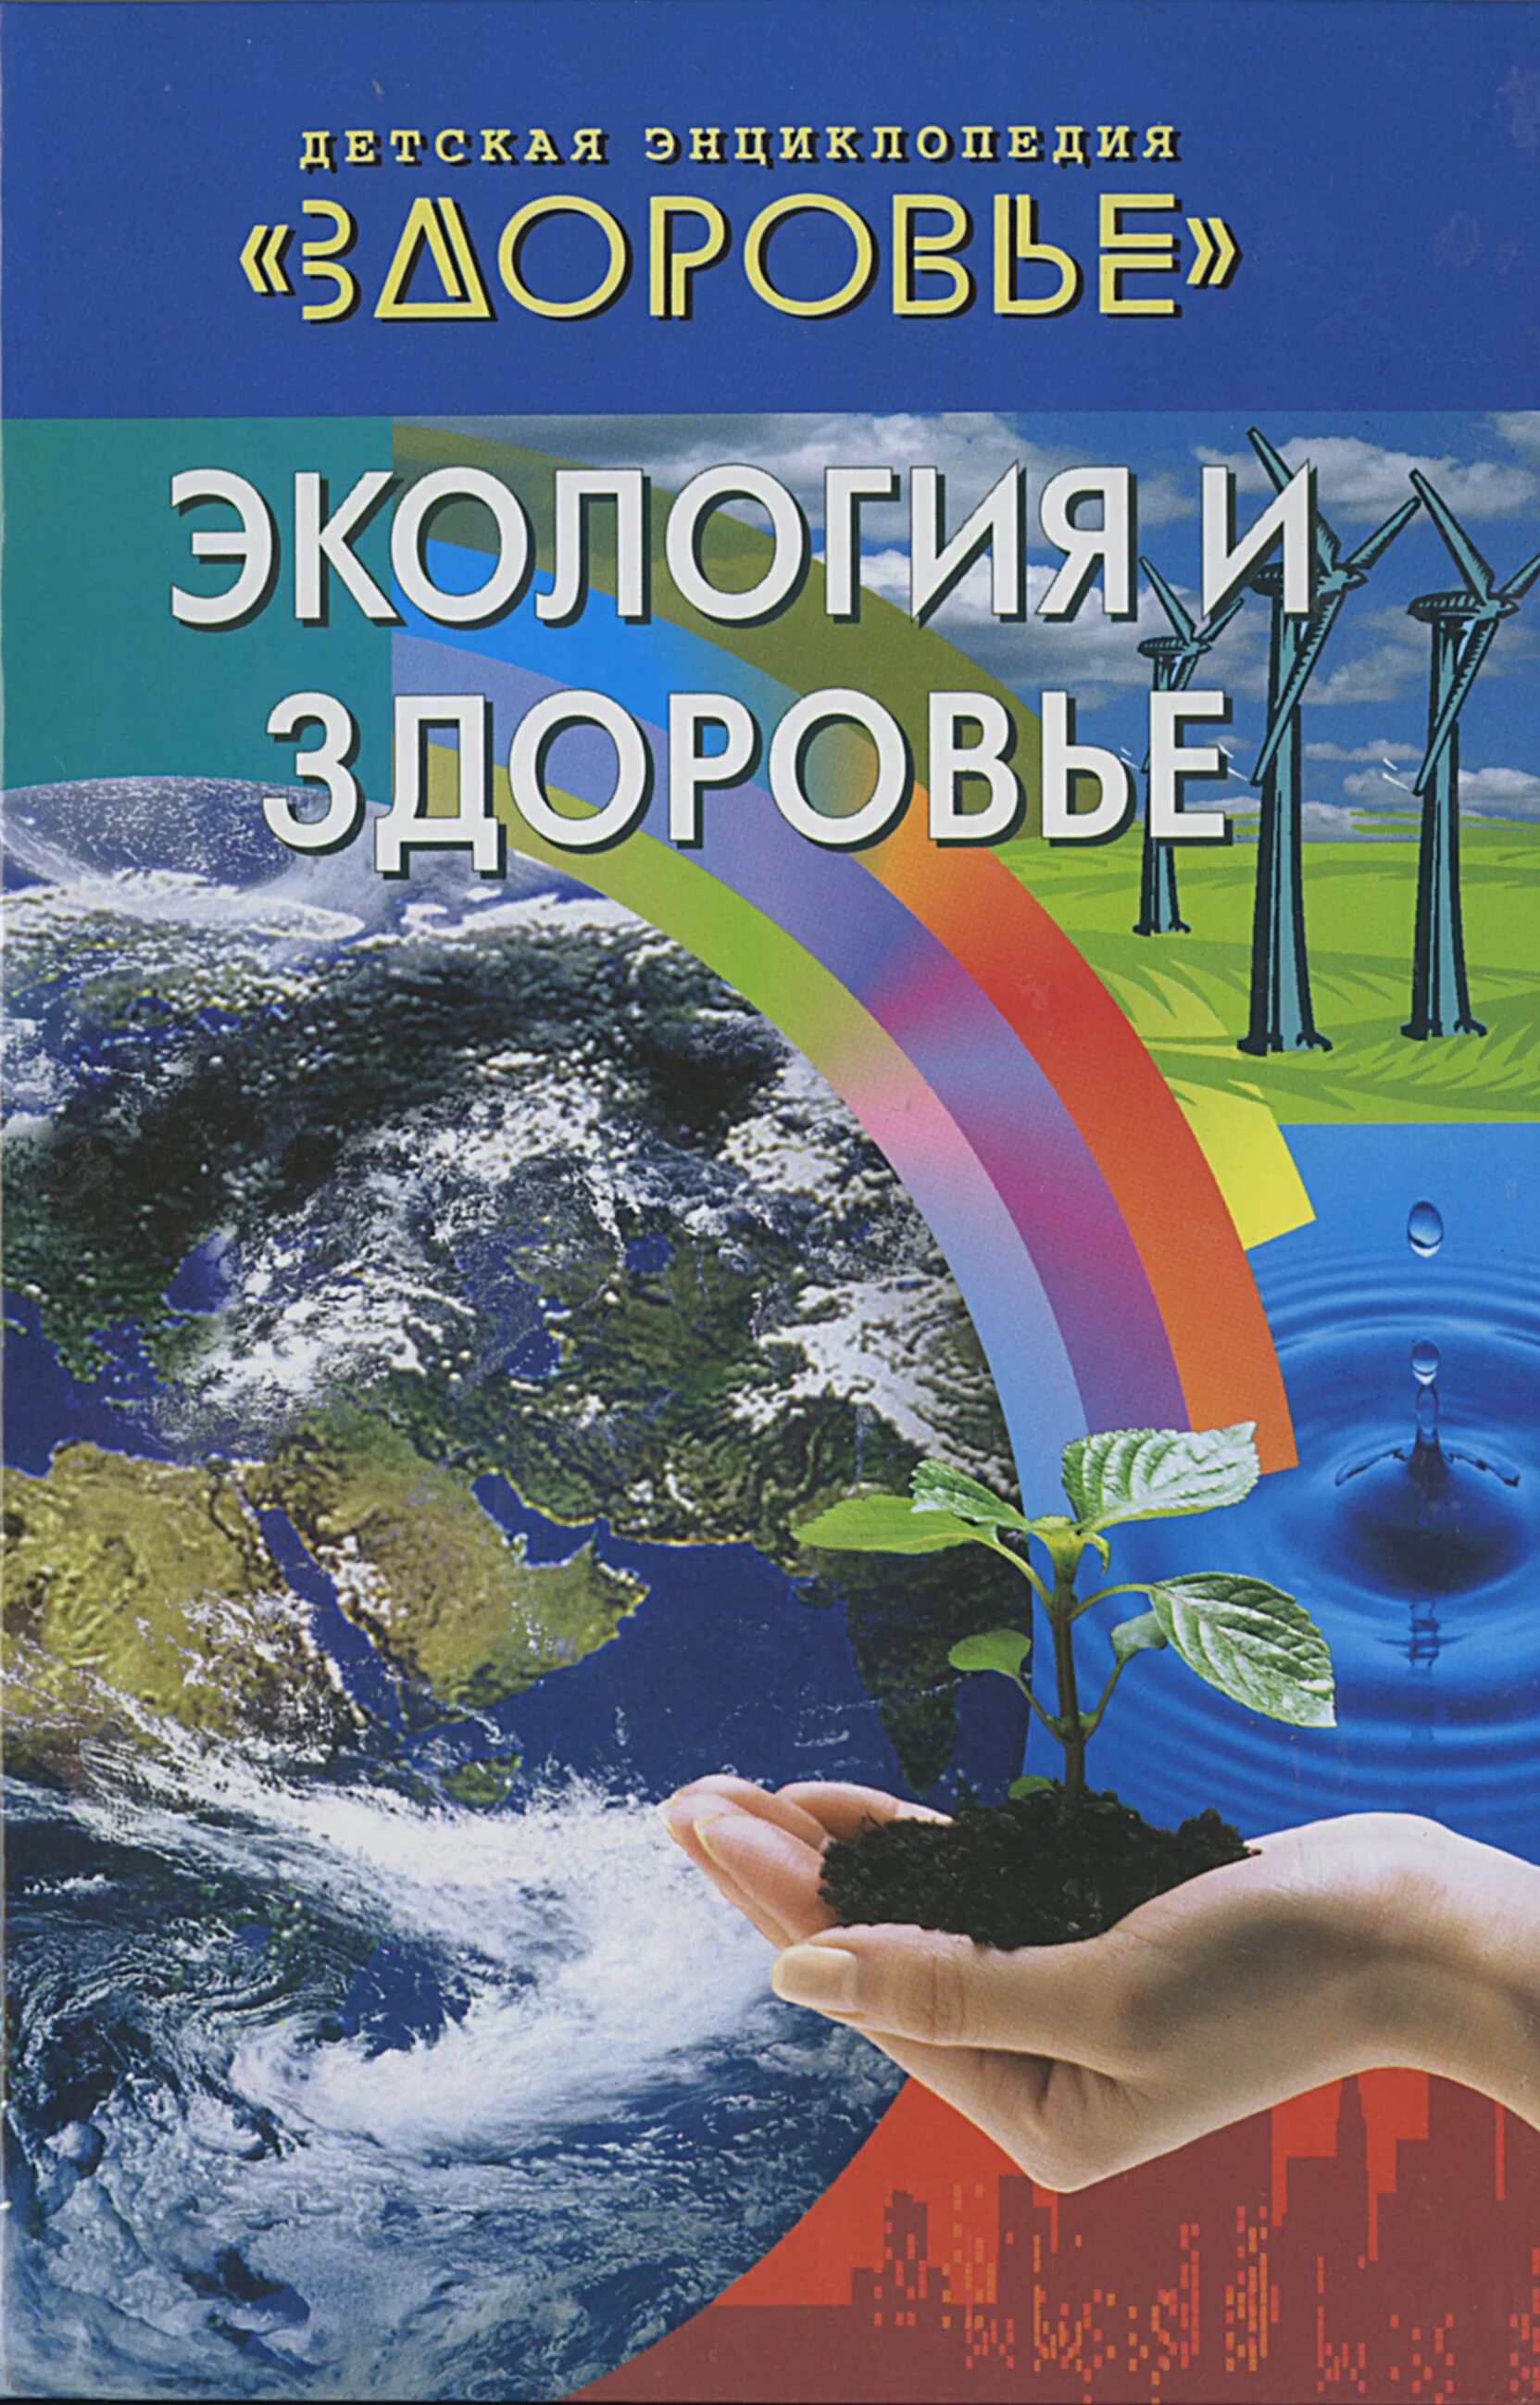 Ecology book. Книги по экологии. Книги про экологию. Детские книги по экологии. Книги по экологии для детей.